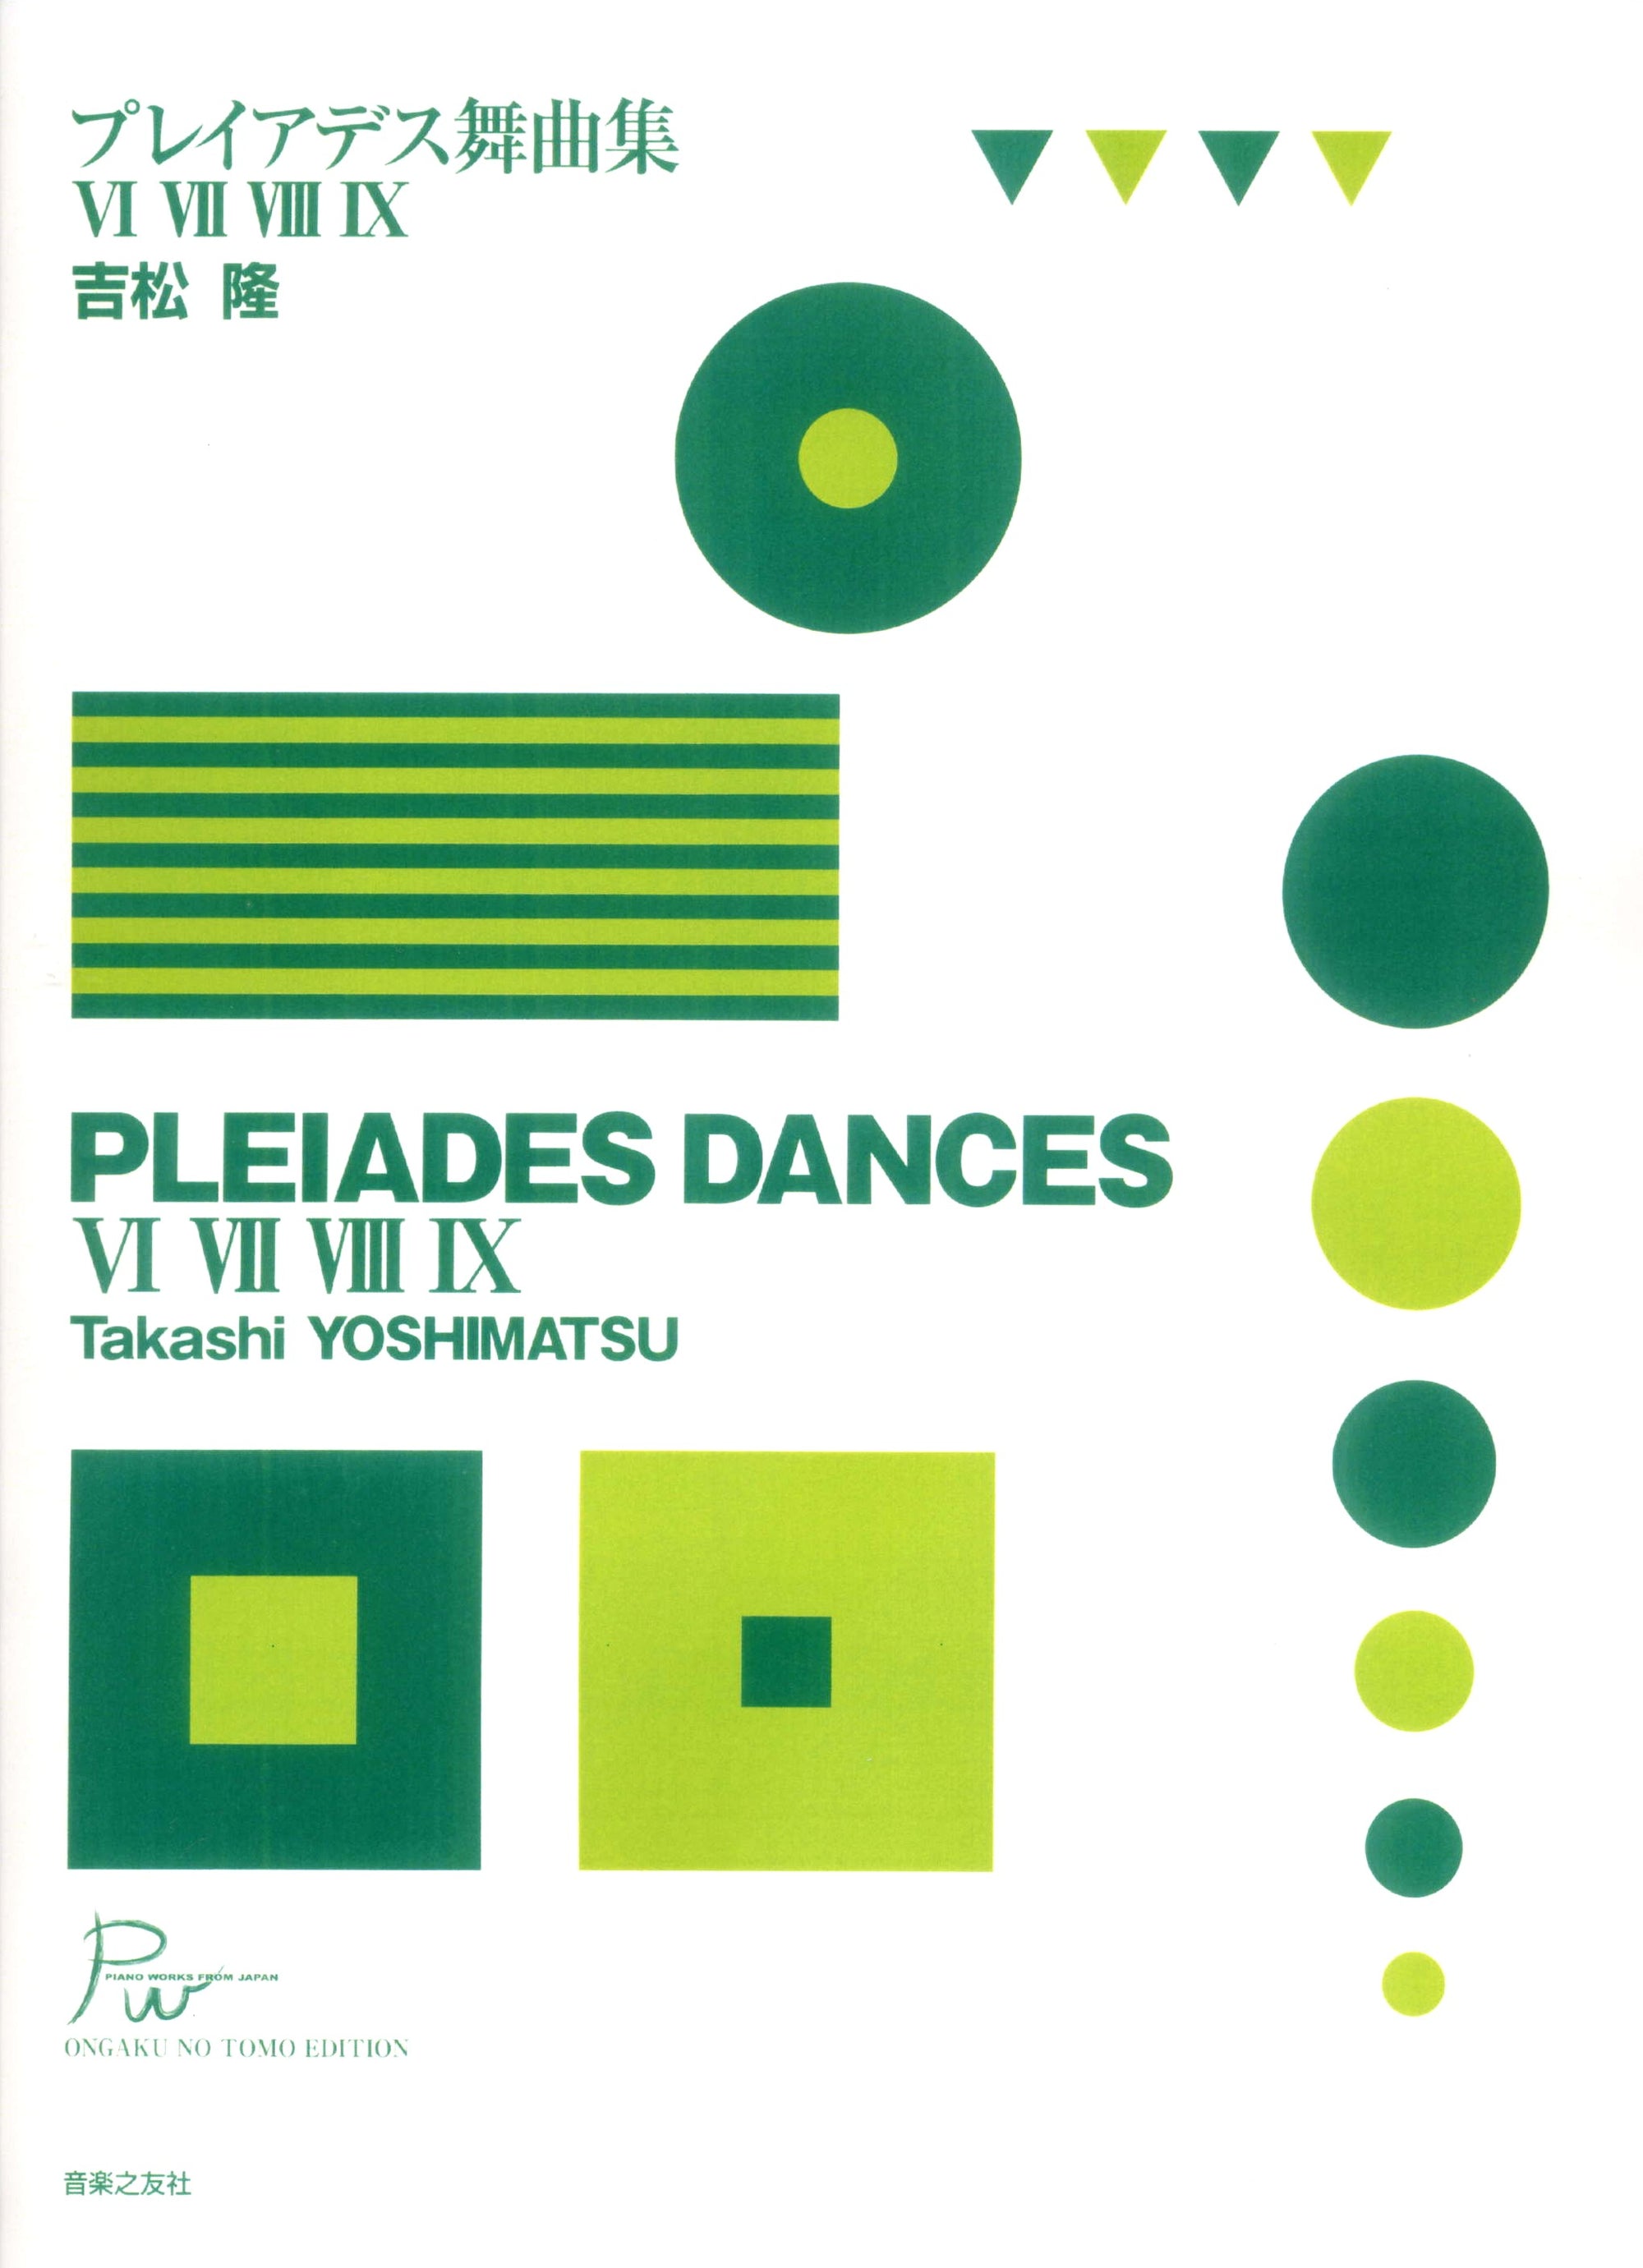 Yoshimatsu: Pleiades Dances VI, VII, VIII, & IX